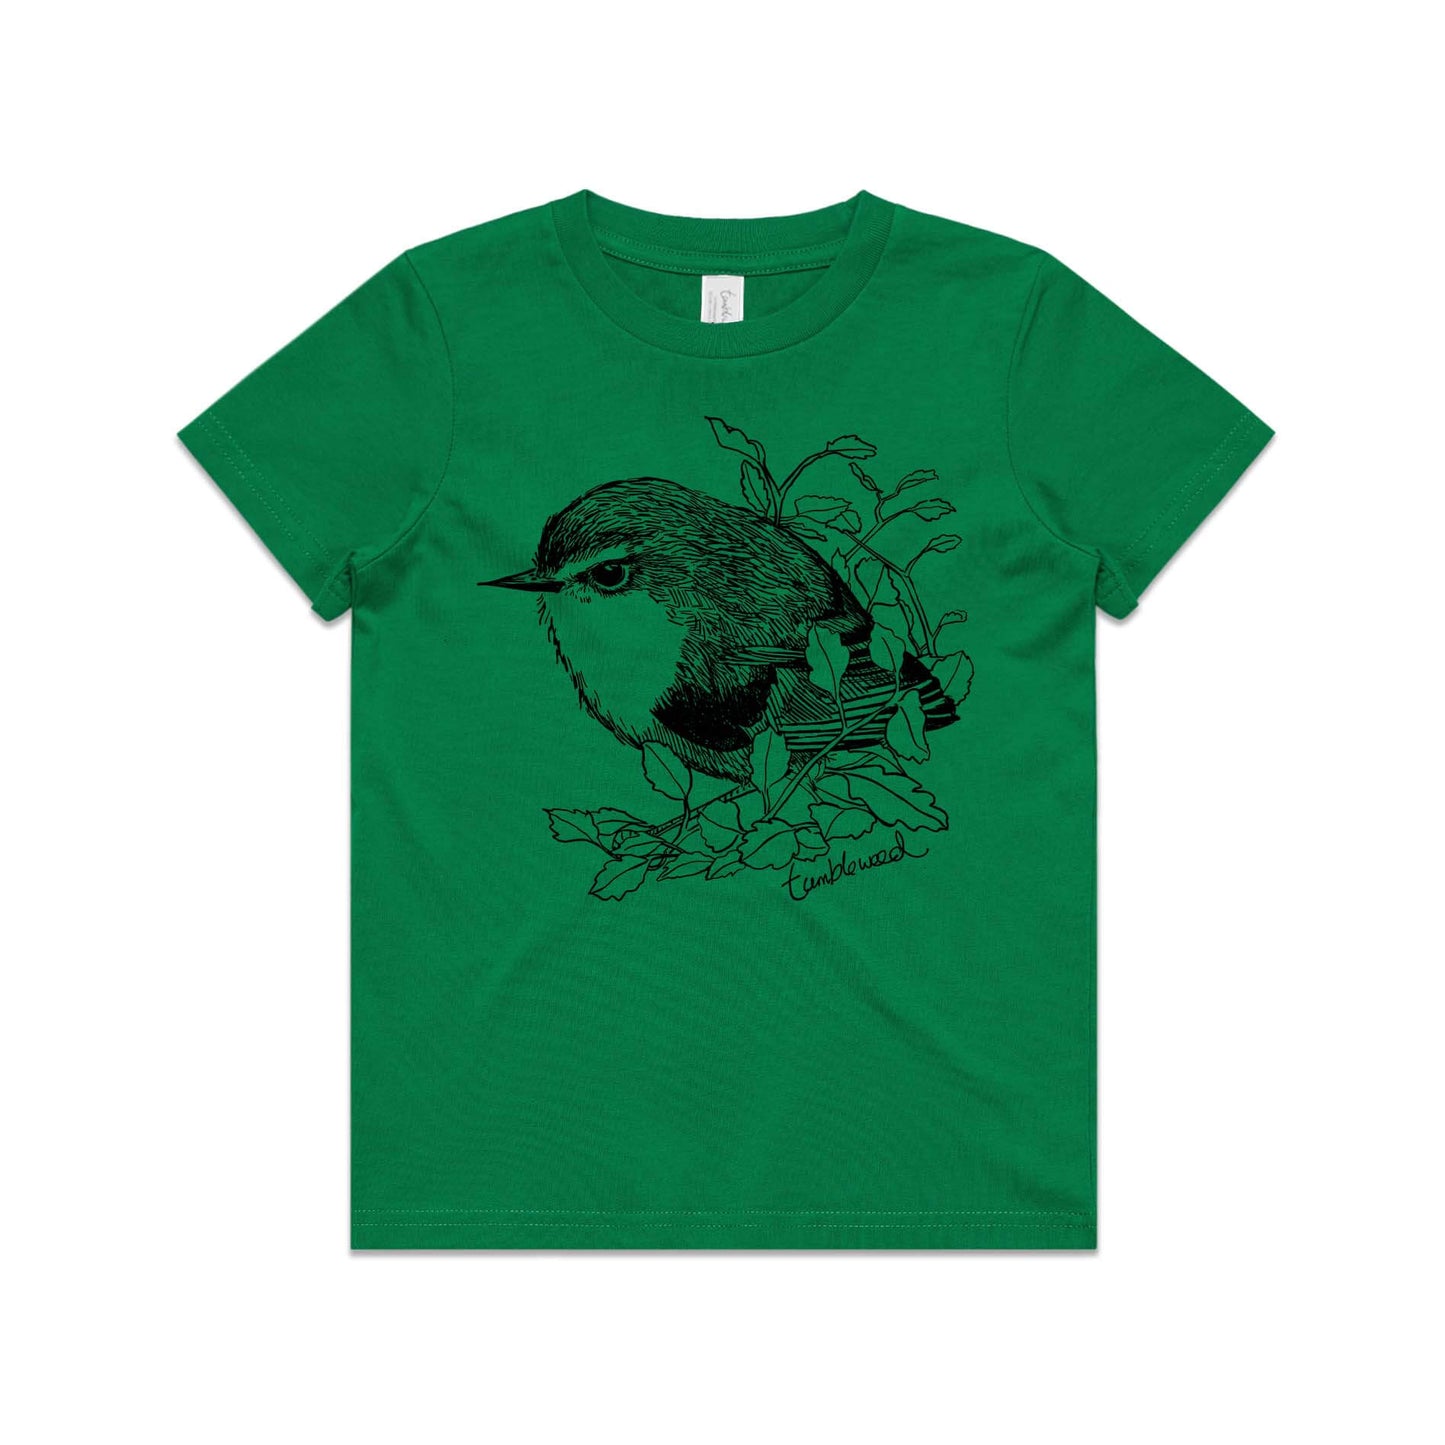 Green, cotton kids' t-shirt with screen printed titipounamu/rifleman design.